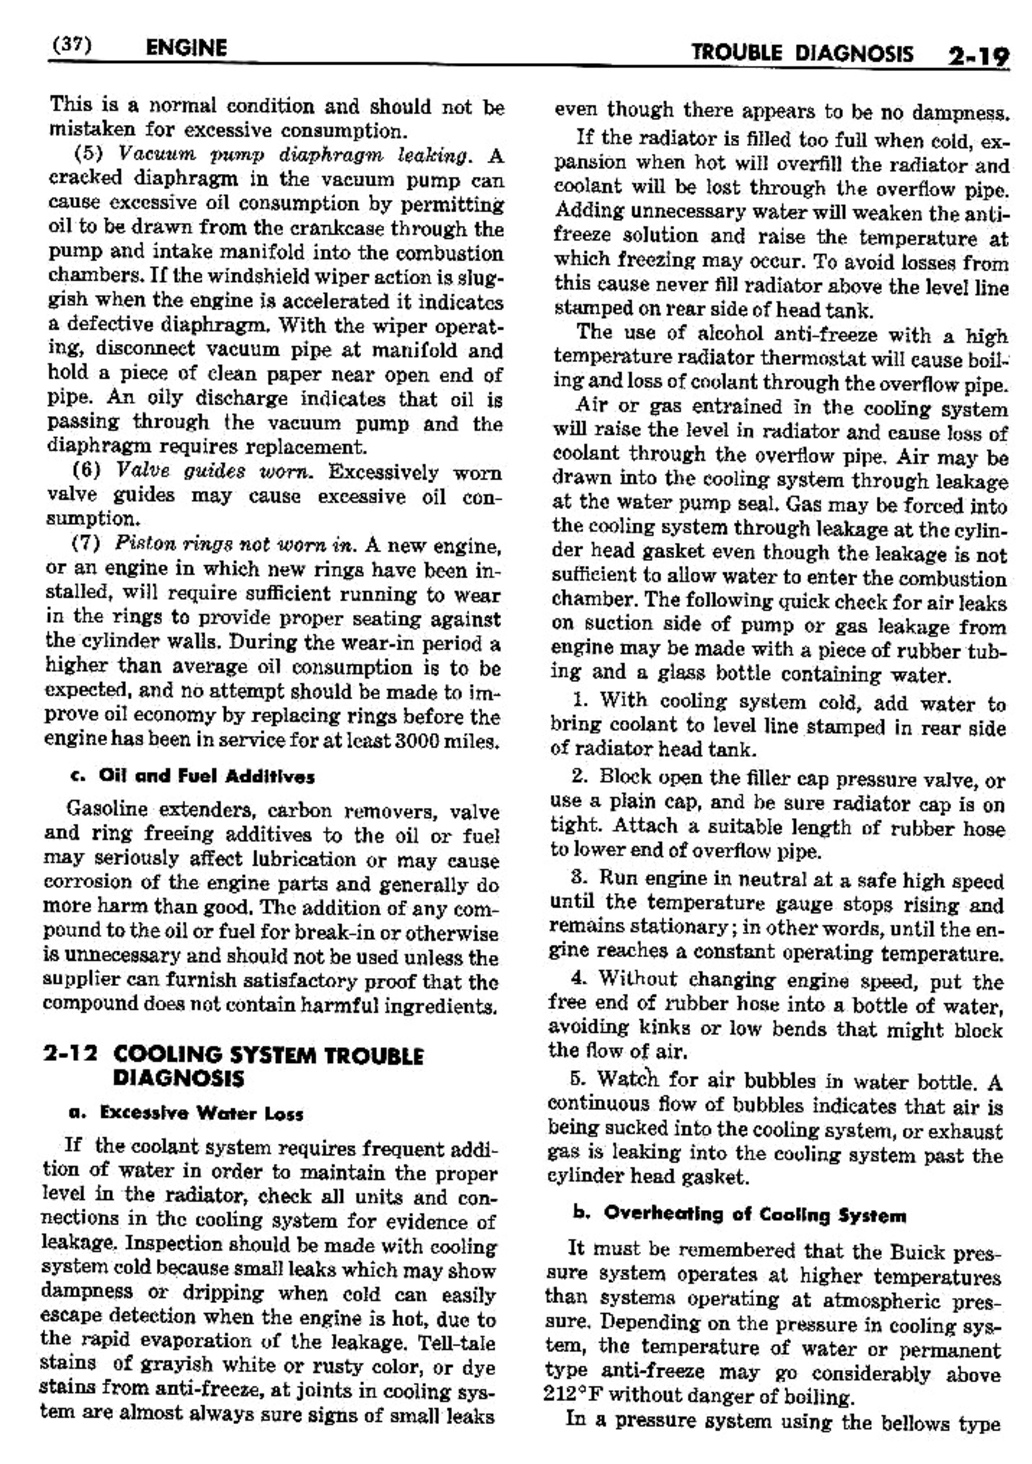 n_03 1950 Buick Shop Manual - Engine-019-019.jpg